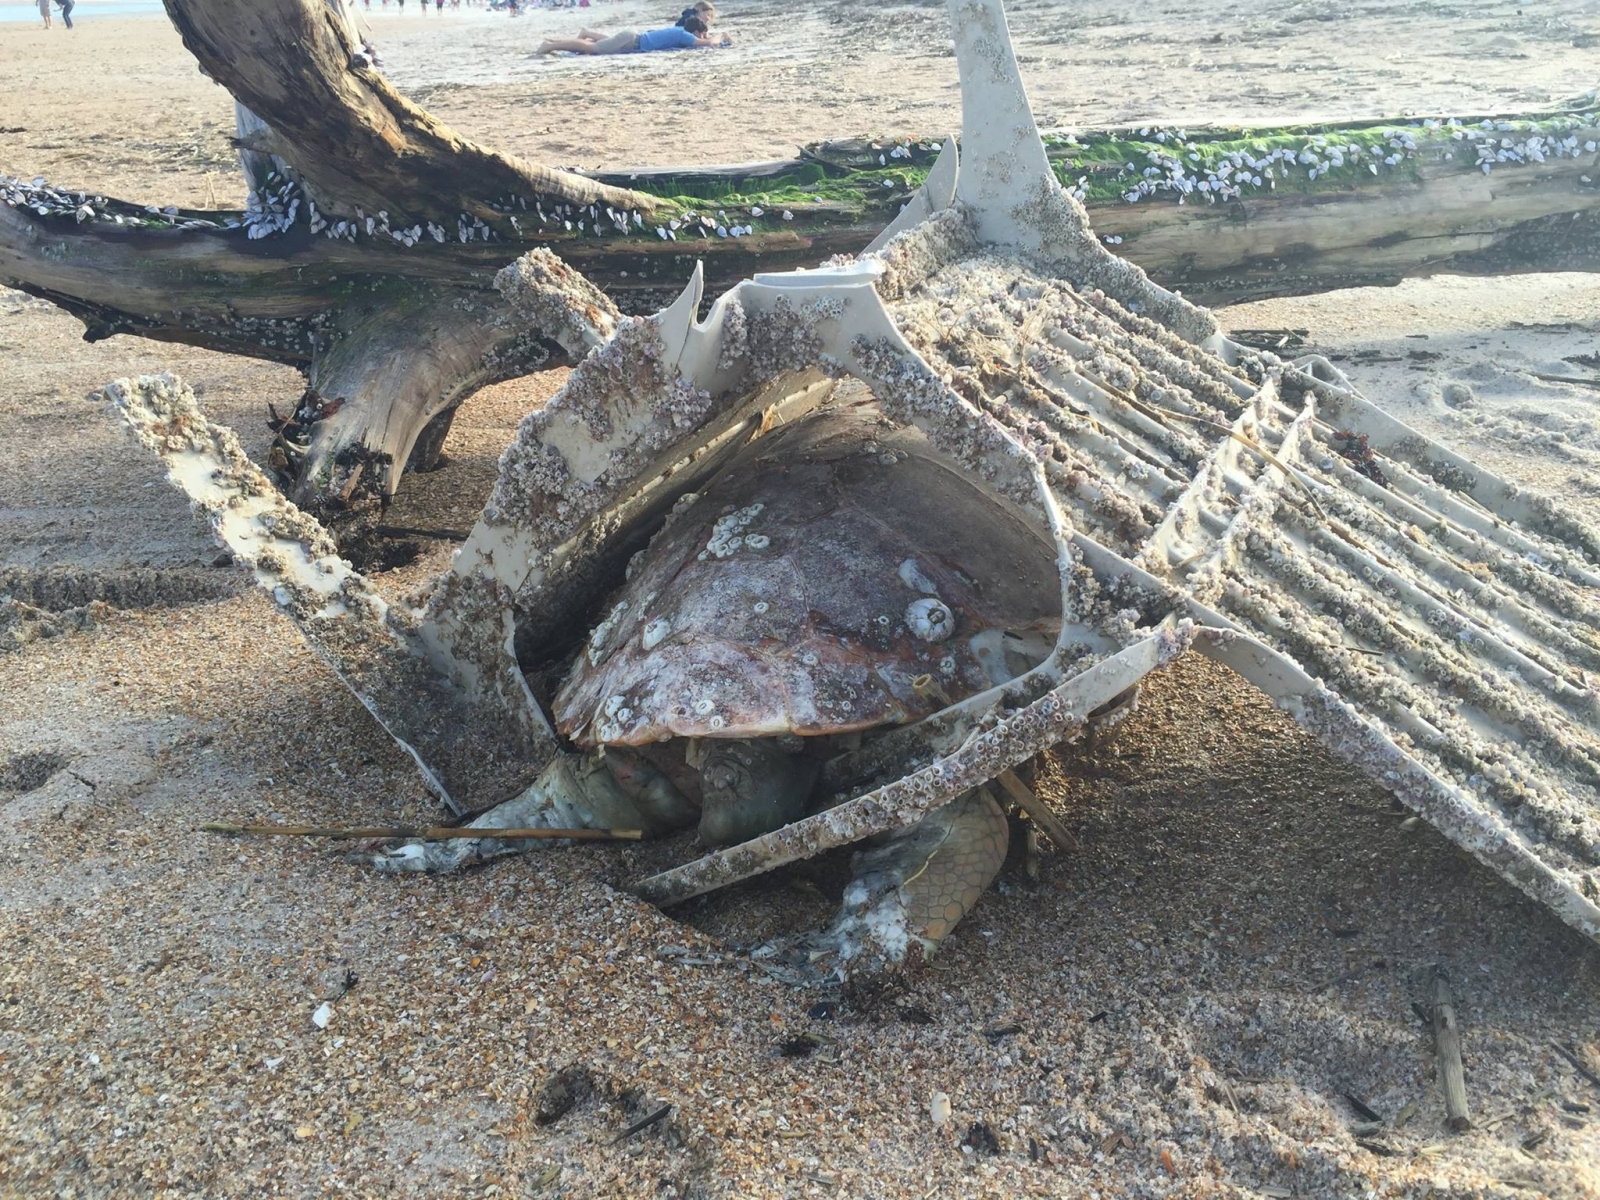 dead sea turtle stuck in plastic lawn chair